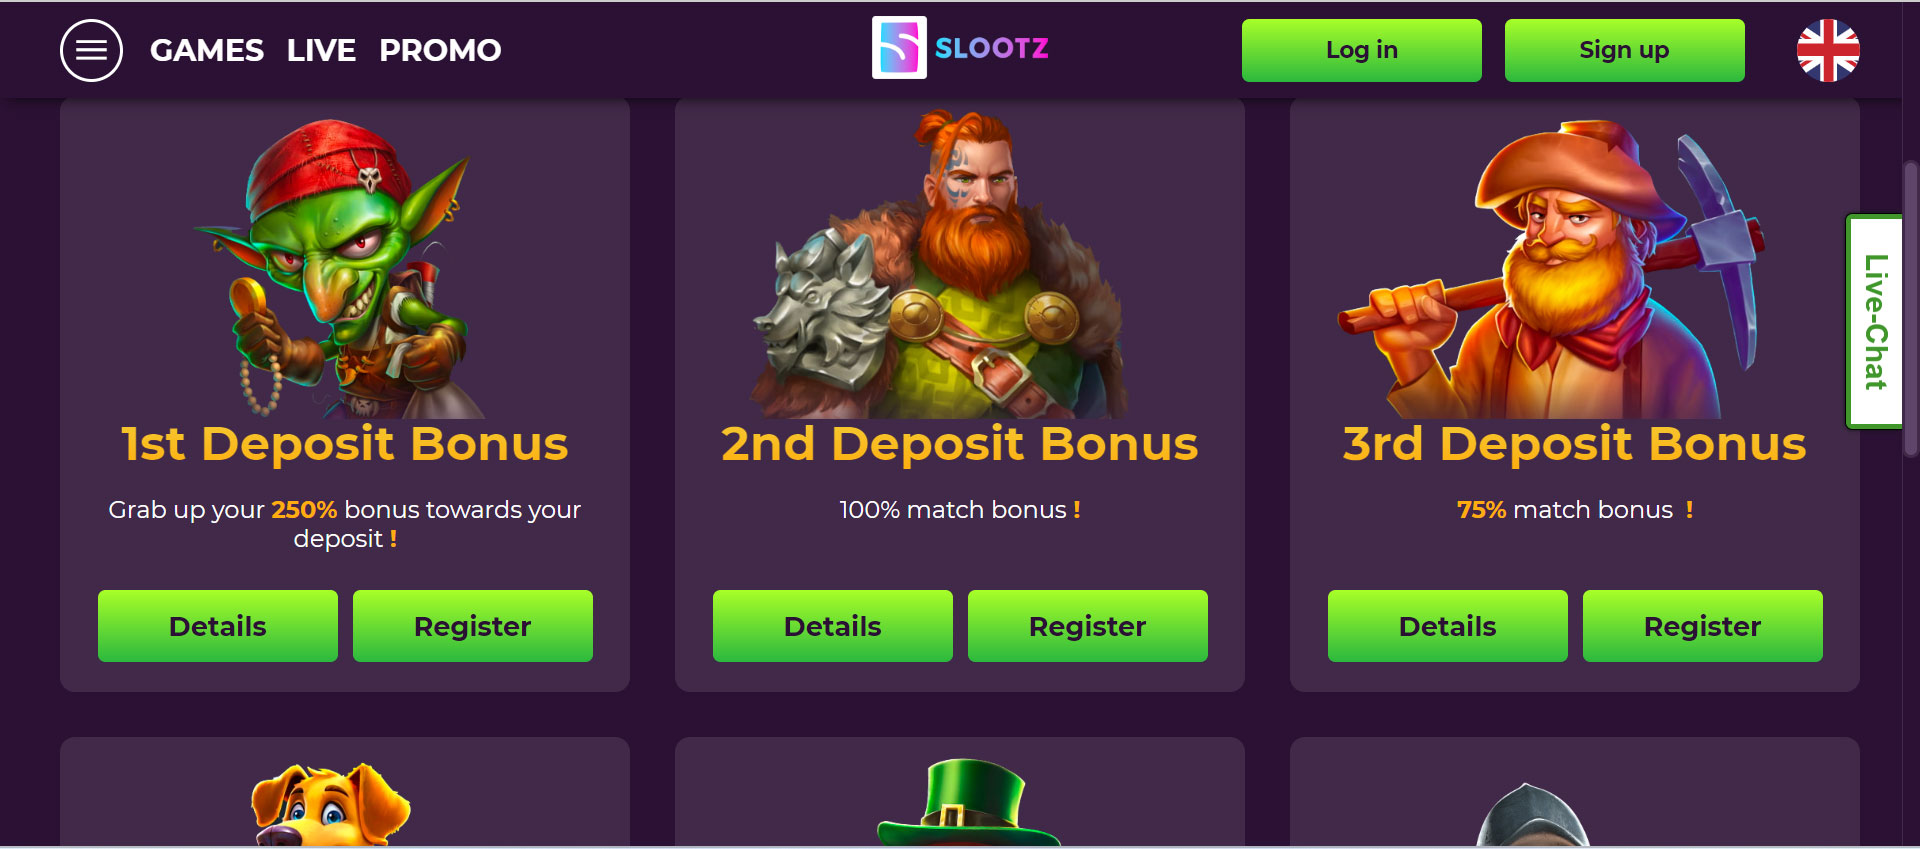 Slootz Casino Promotions